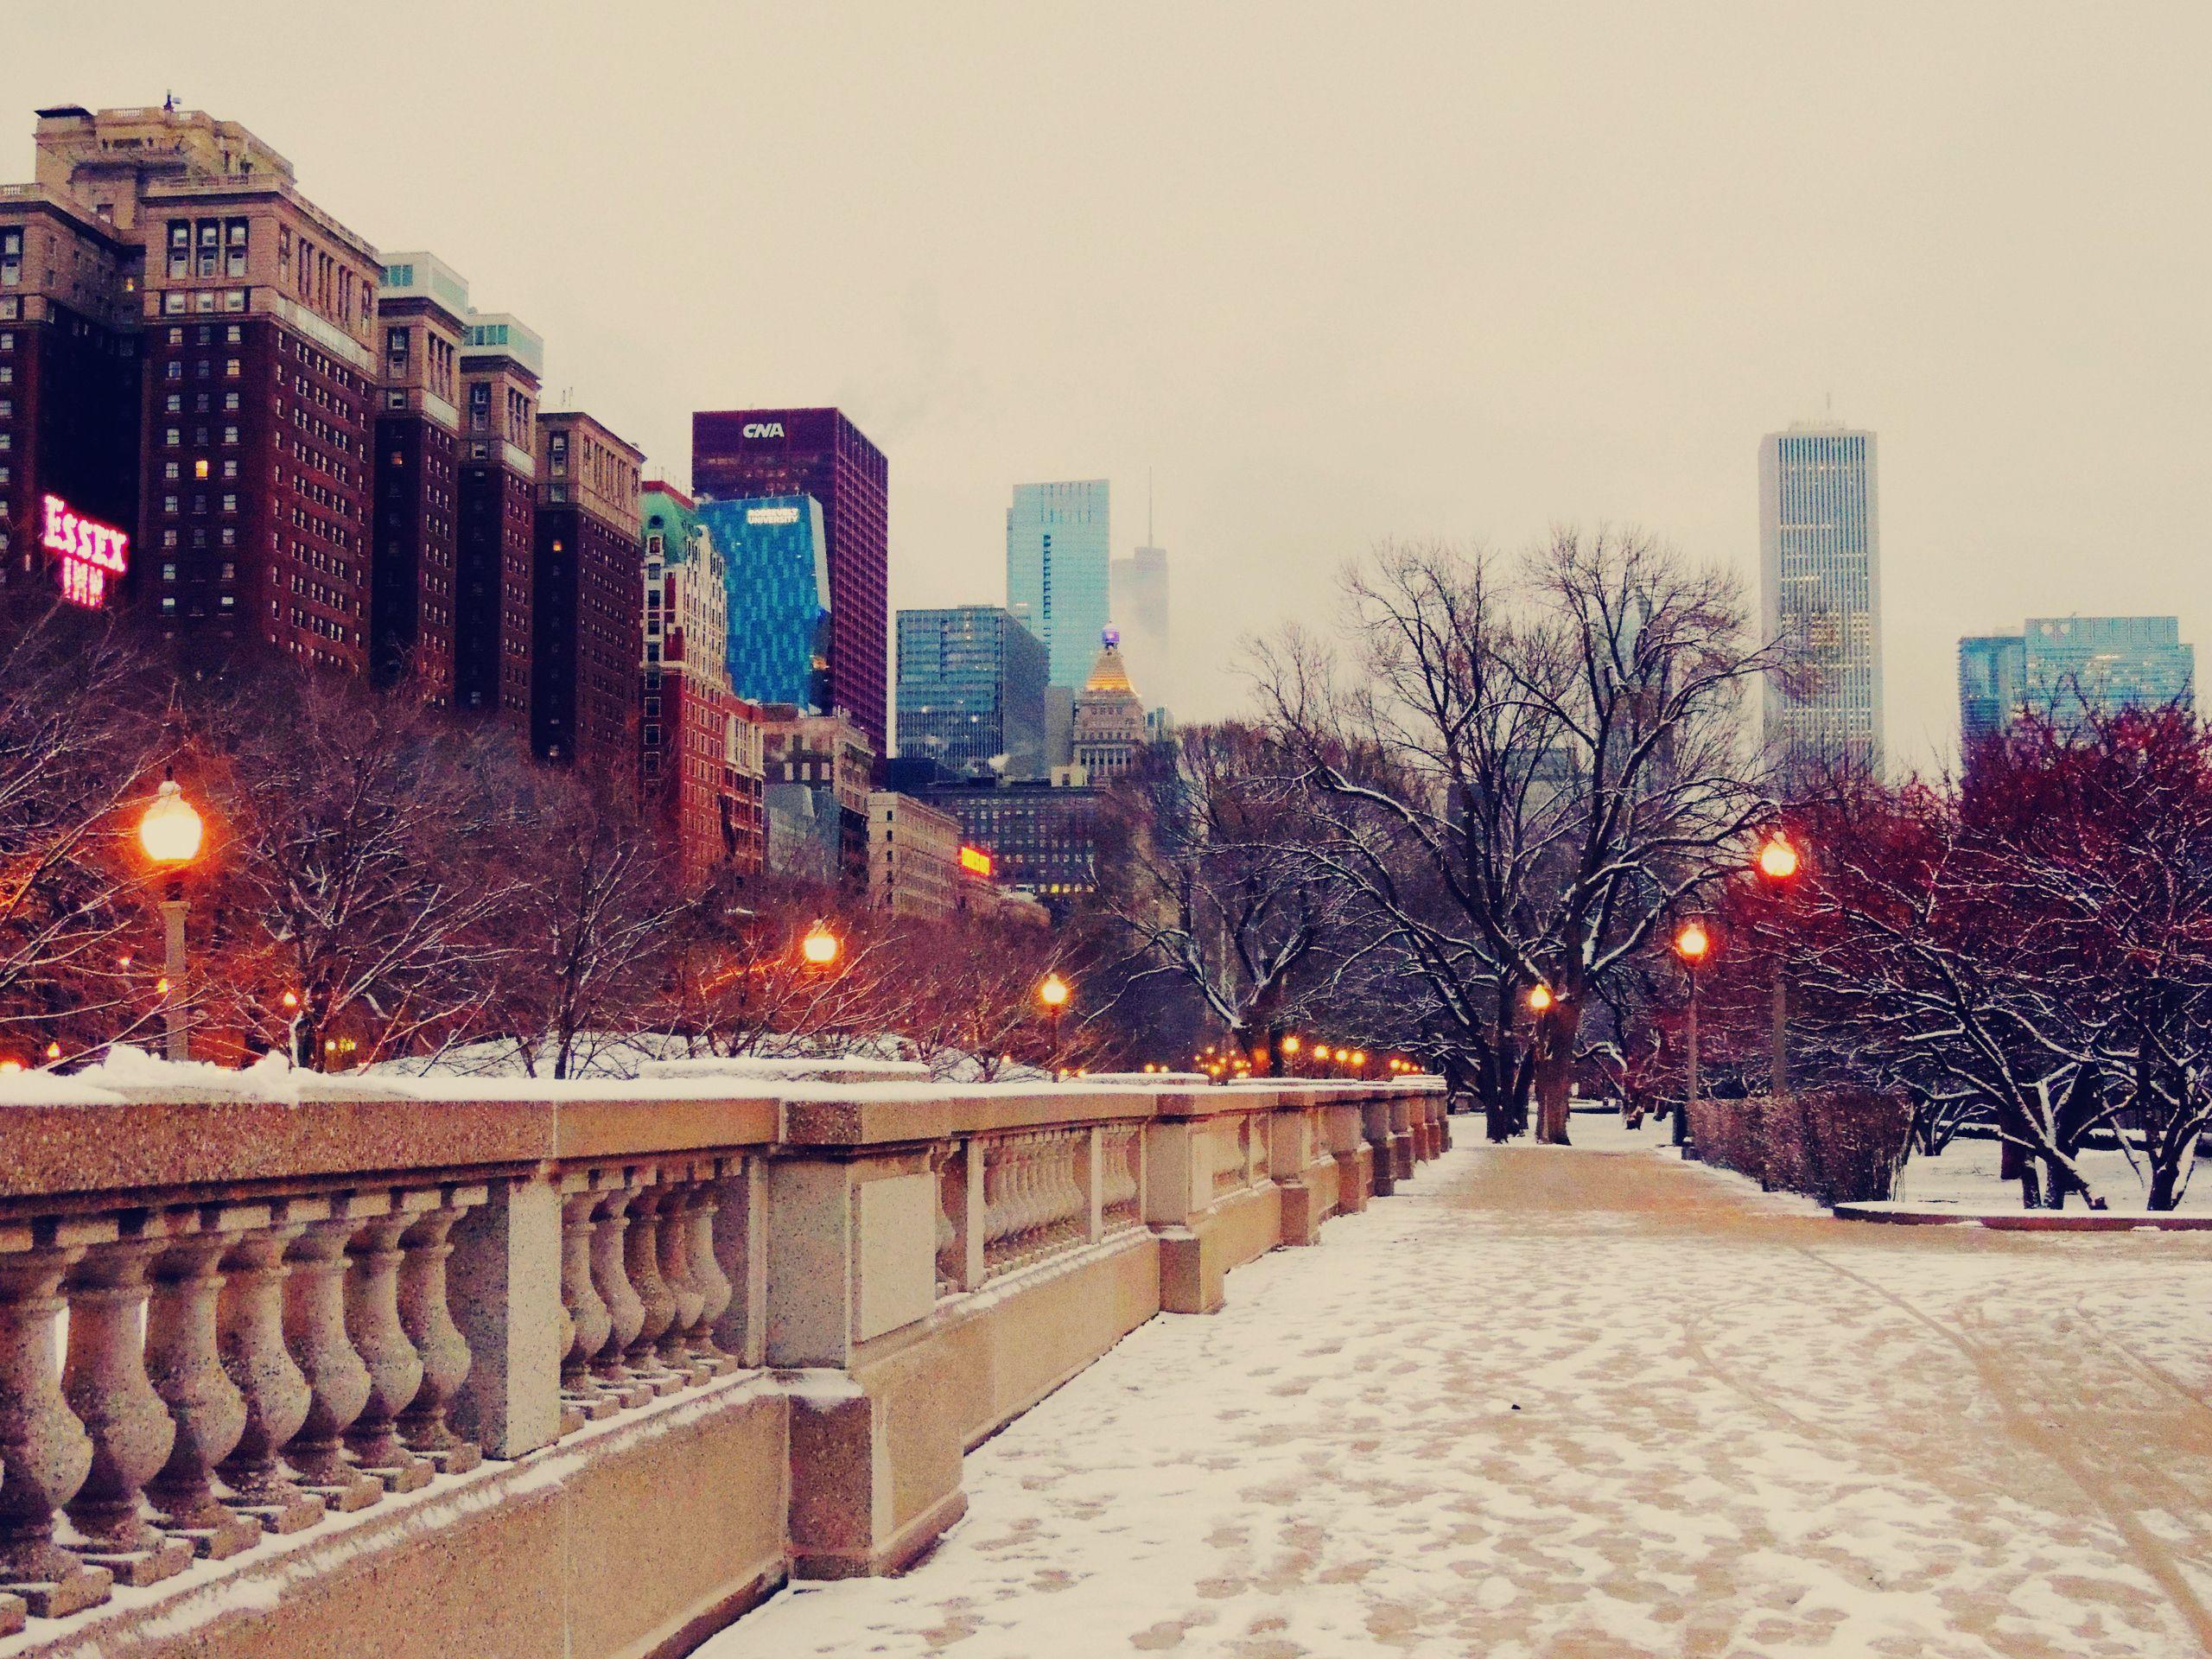 The city winter!